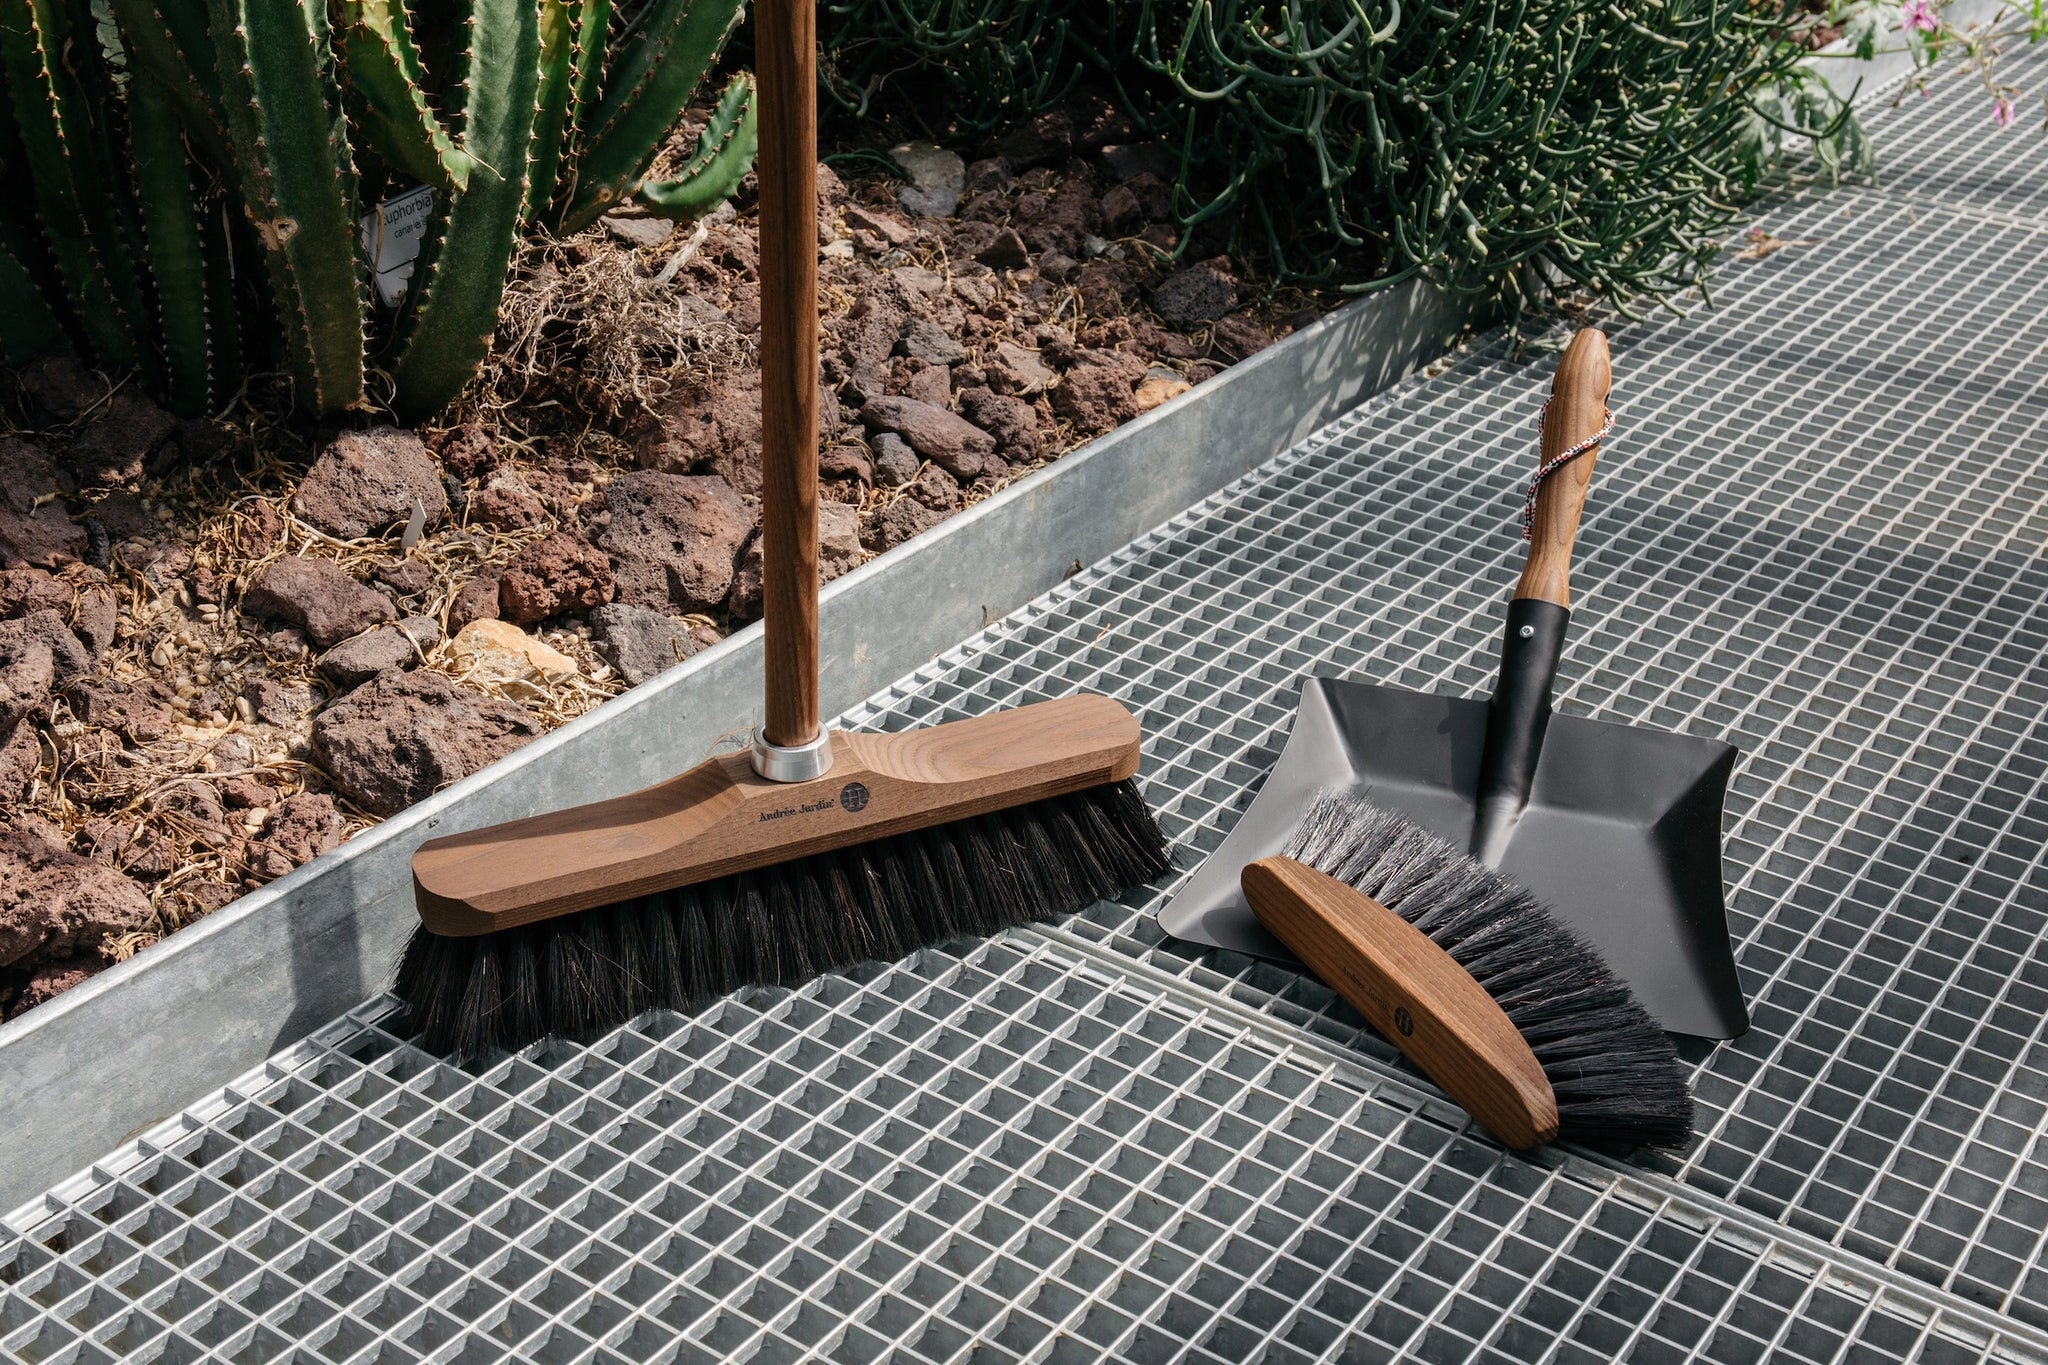 Dark wooden broom next to dark hand brush on top of black dustpan with wooden handle.